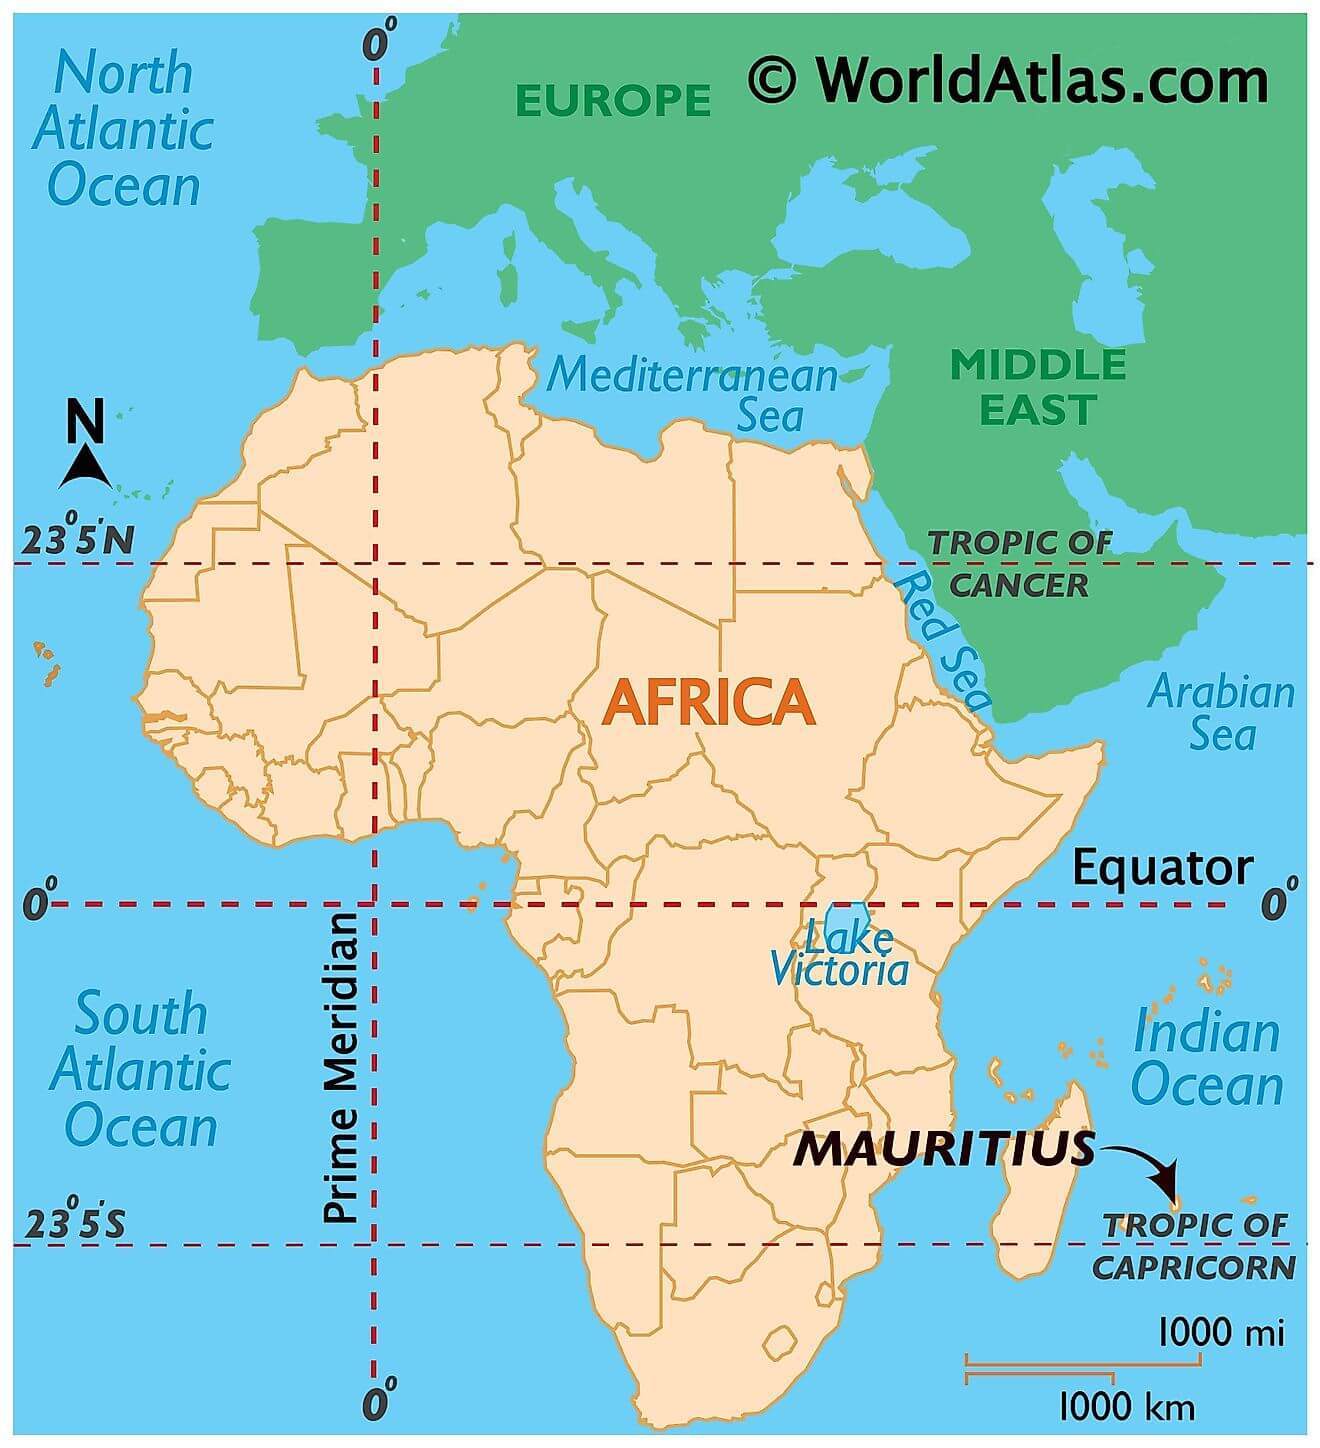 Where is Mauritius?